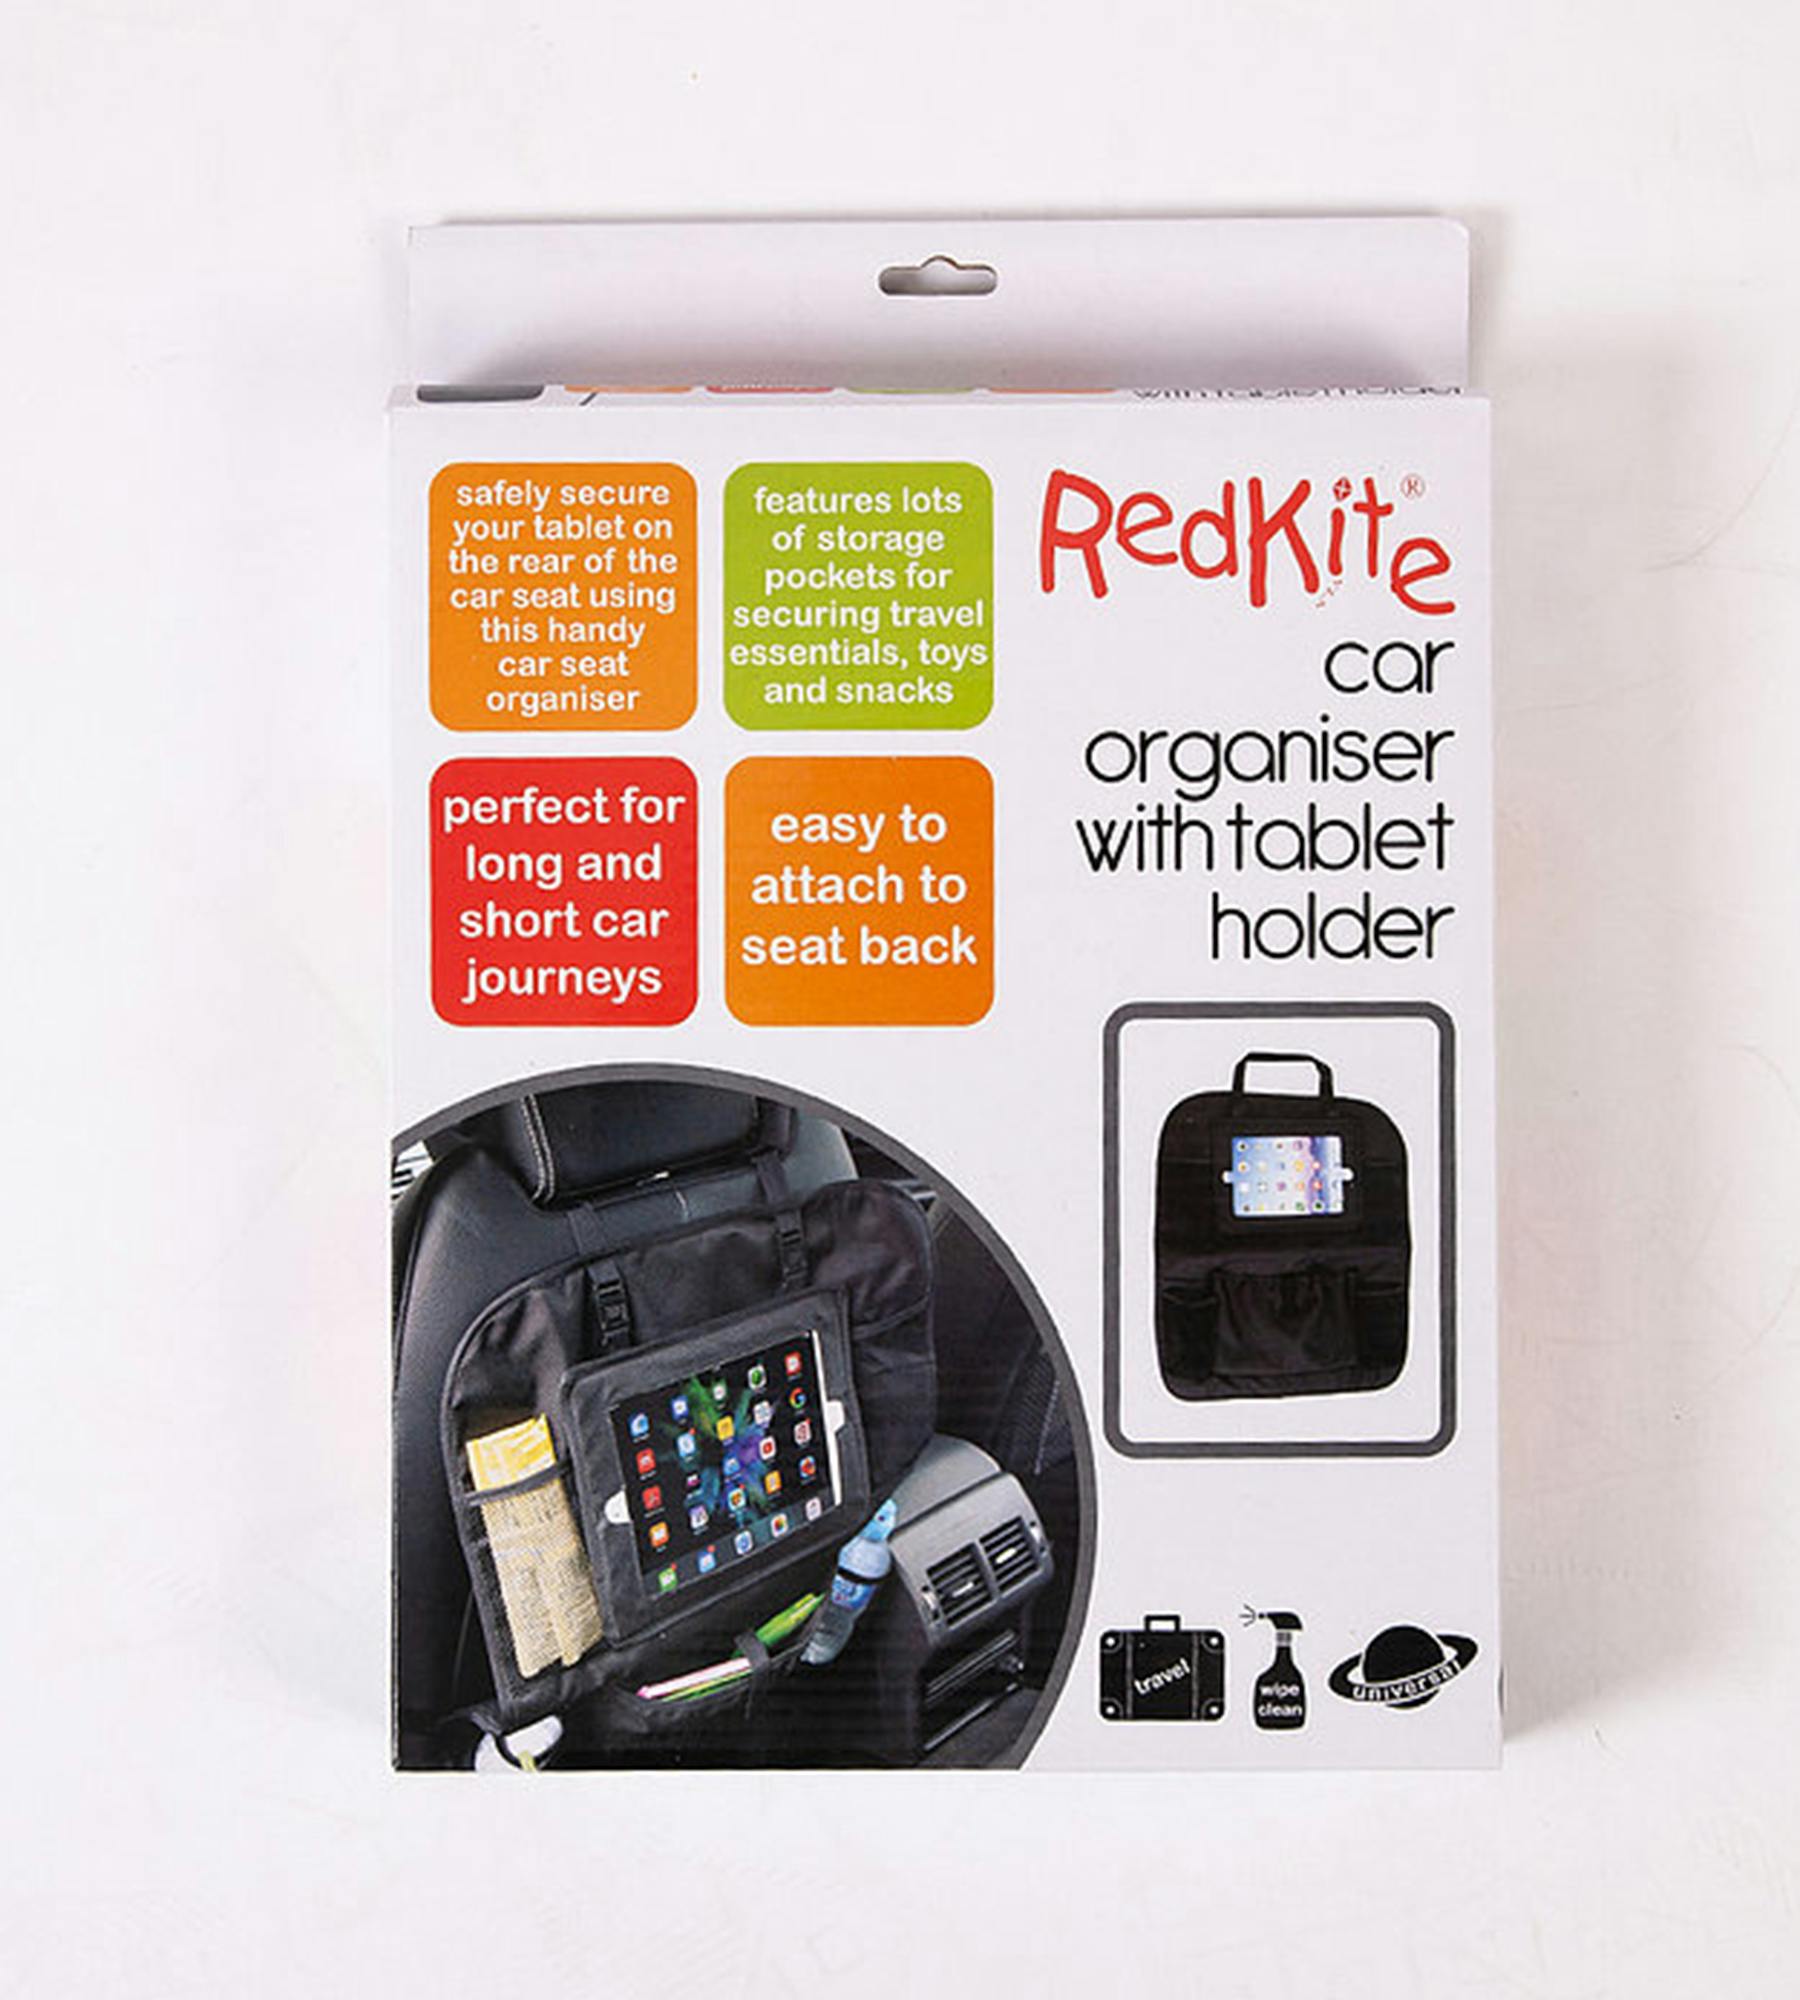 Red Kite Car Organiser with Tablet Holder